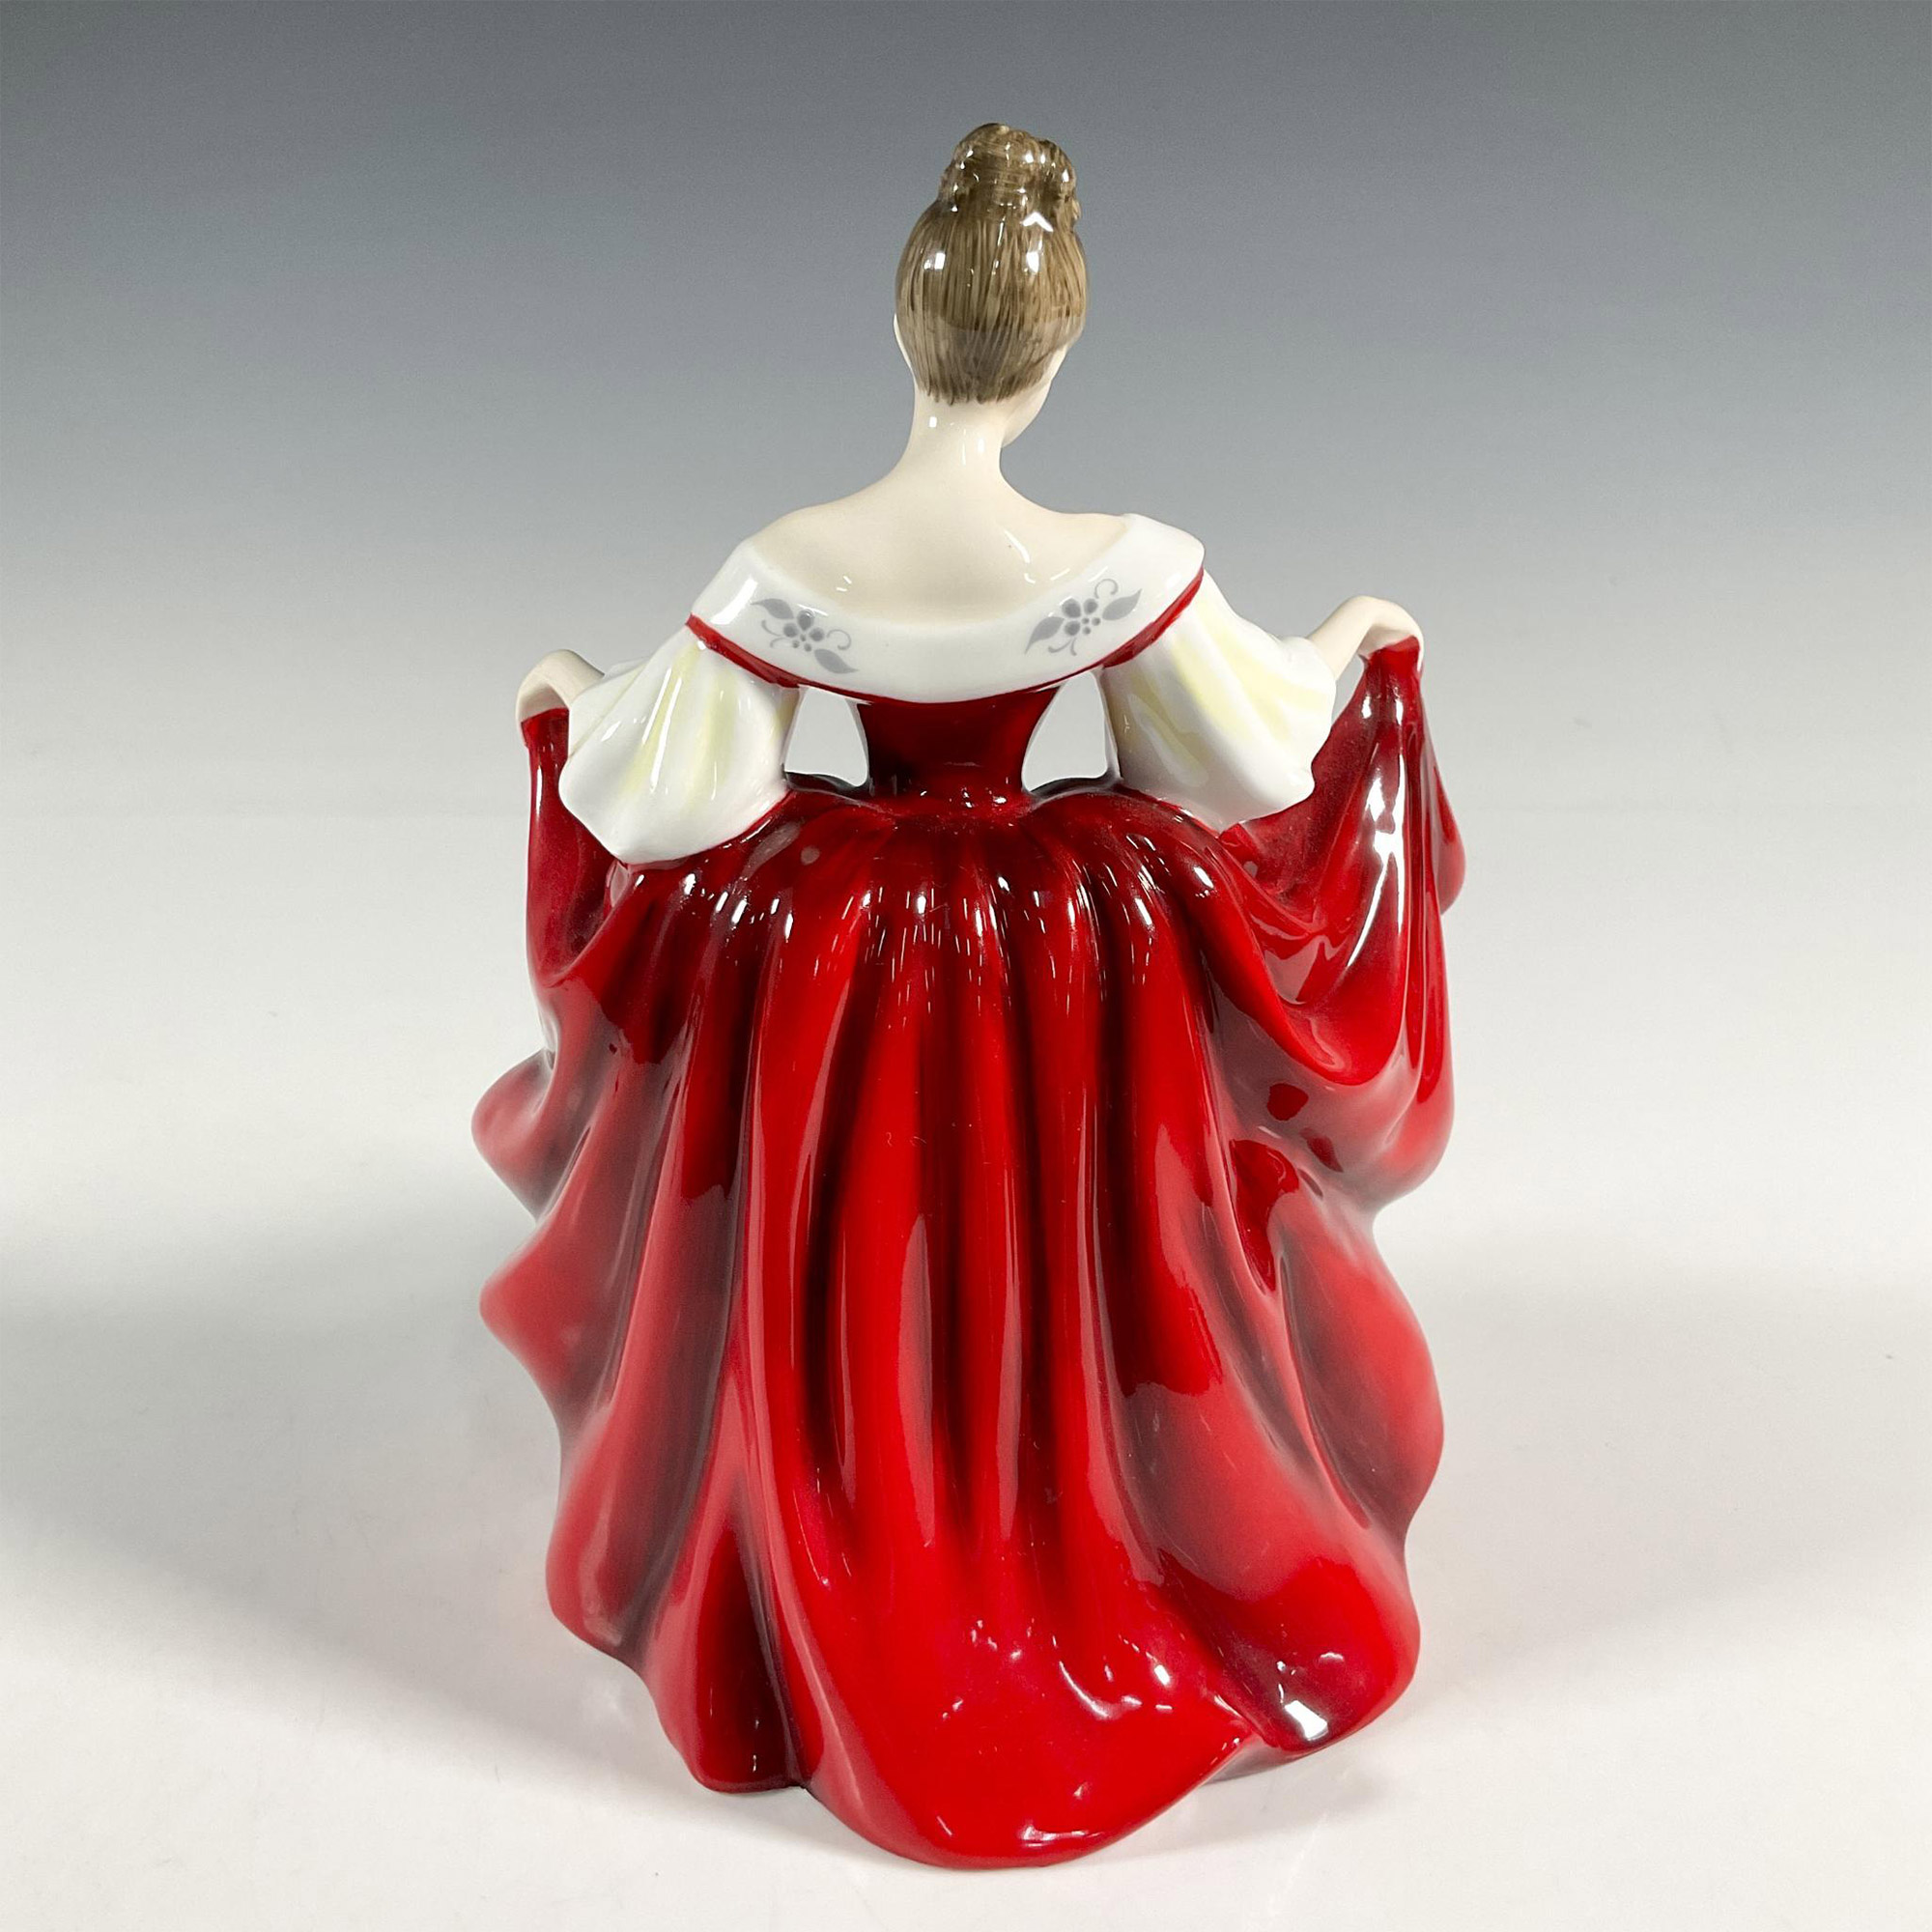 Sara HN2265 - Royal Doulton Figurine - Image 2 of 3